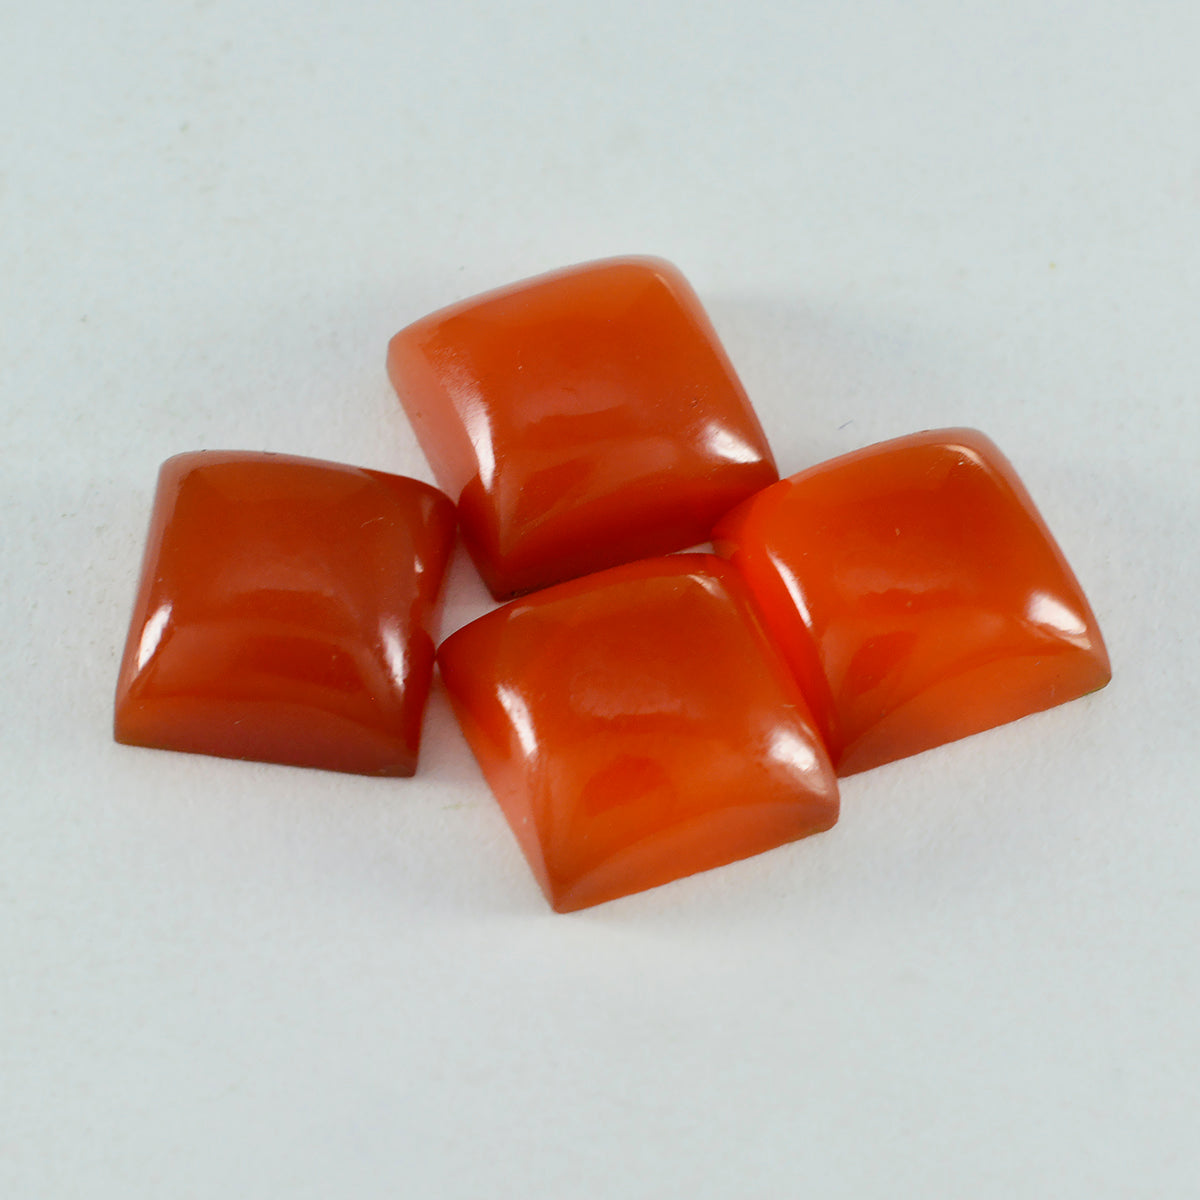 Riyogems 1PC Red Onyx Cabochon 15x15 mm Square Shape good-looking Quality Loose Gems